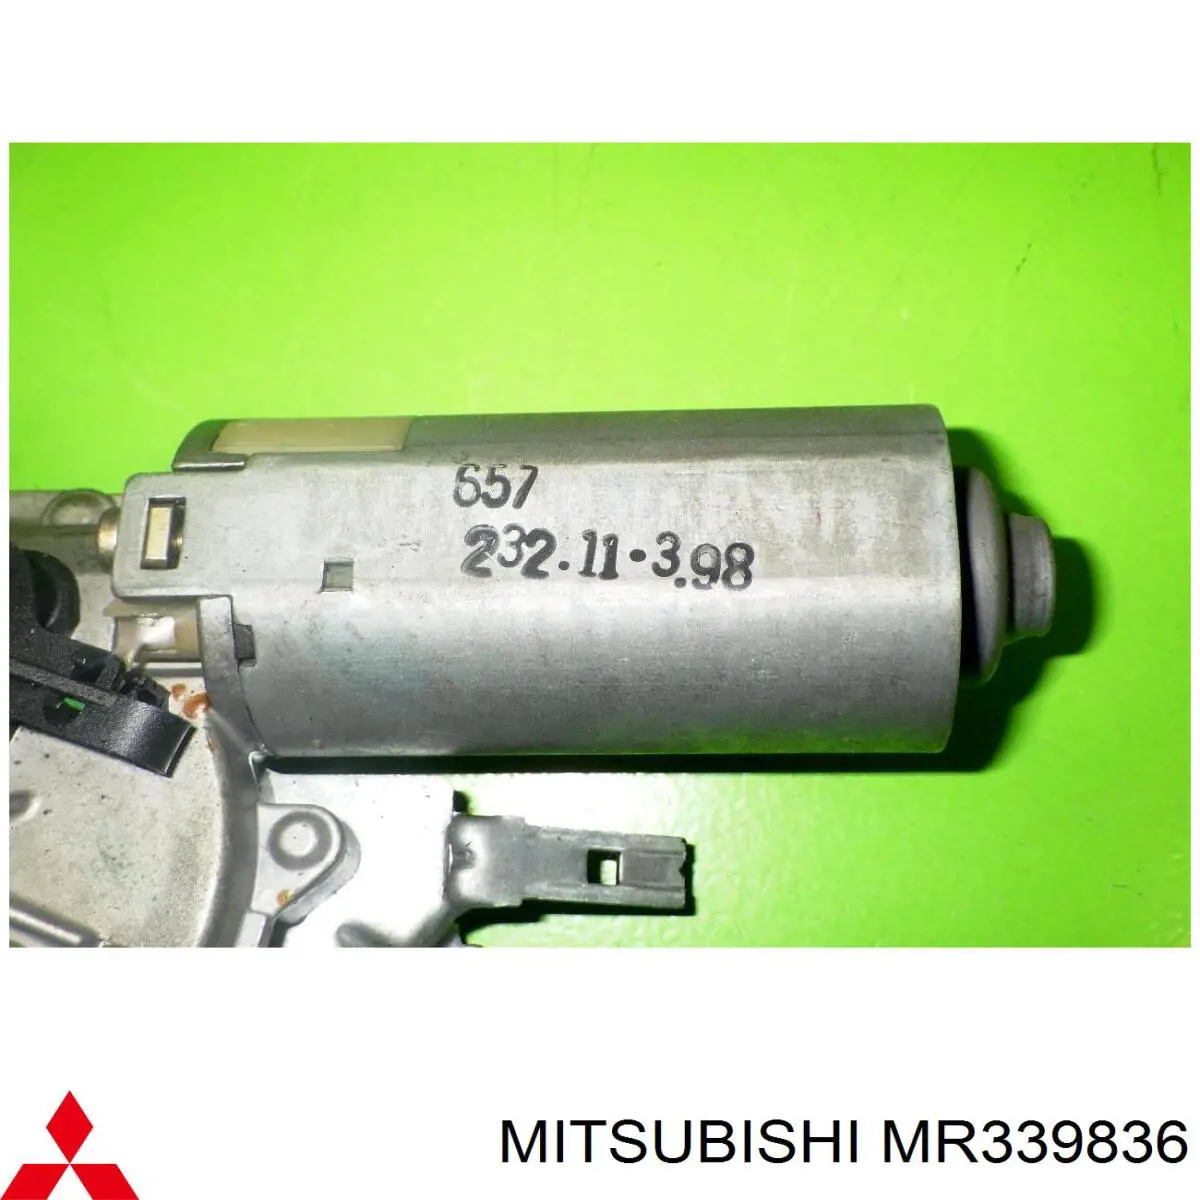 MR339836 Mitsubishi motor de limpador pára-brisas de vidro traseiro